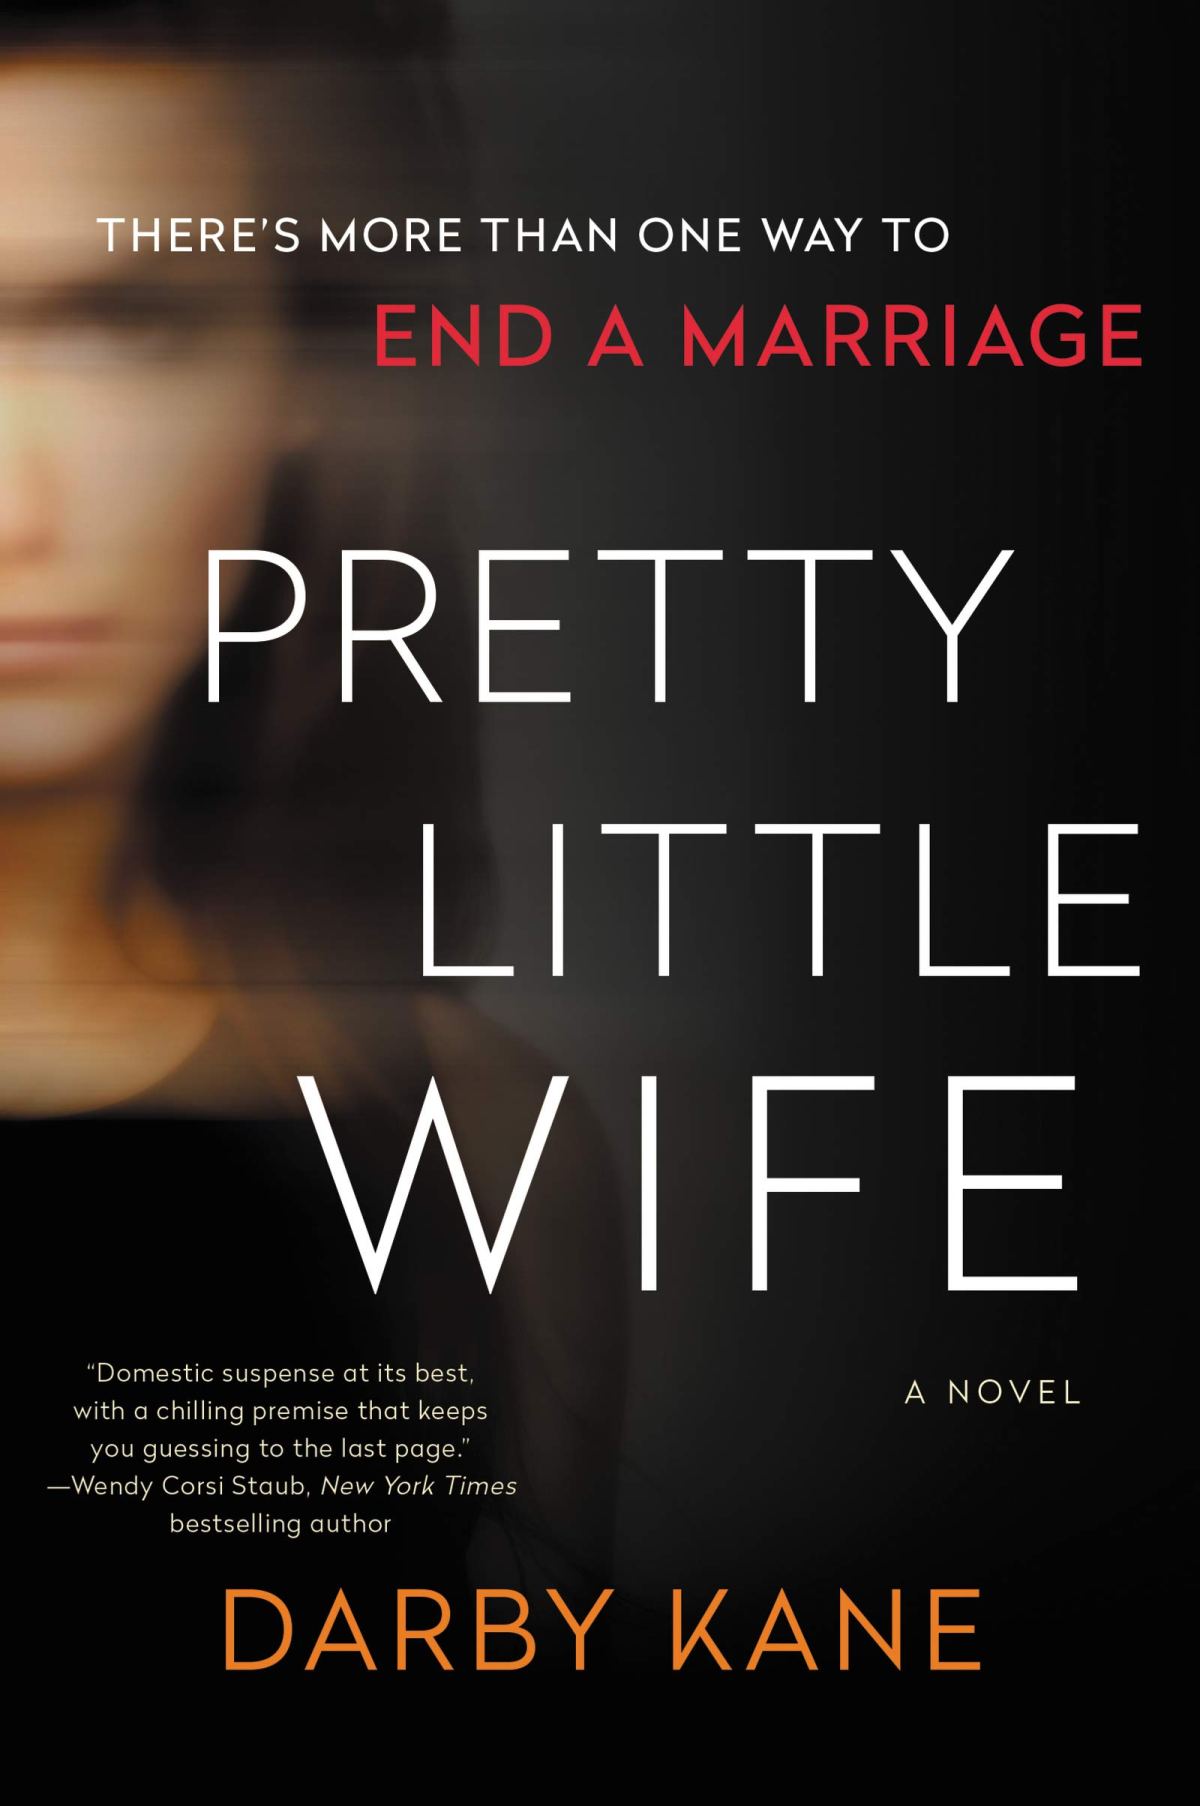 Book 11 – Pretty Little Wife by Darby Kane